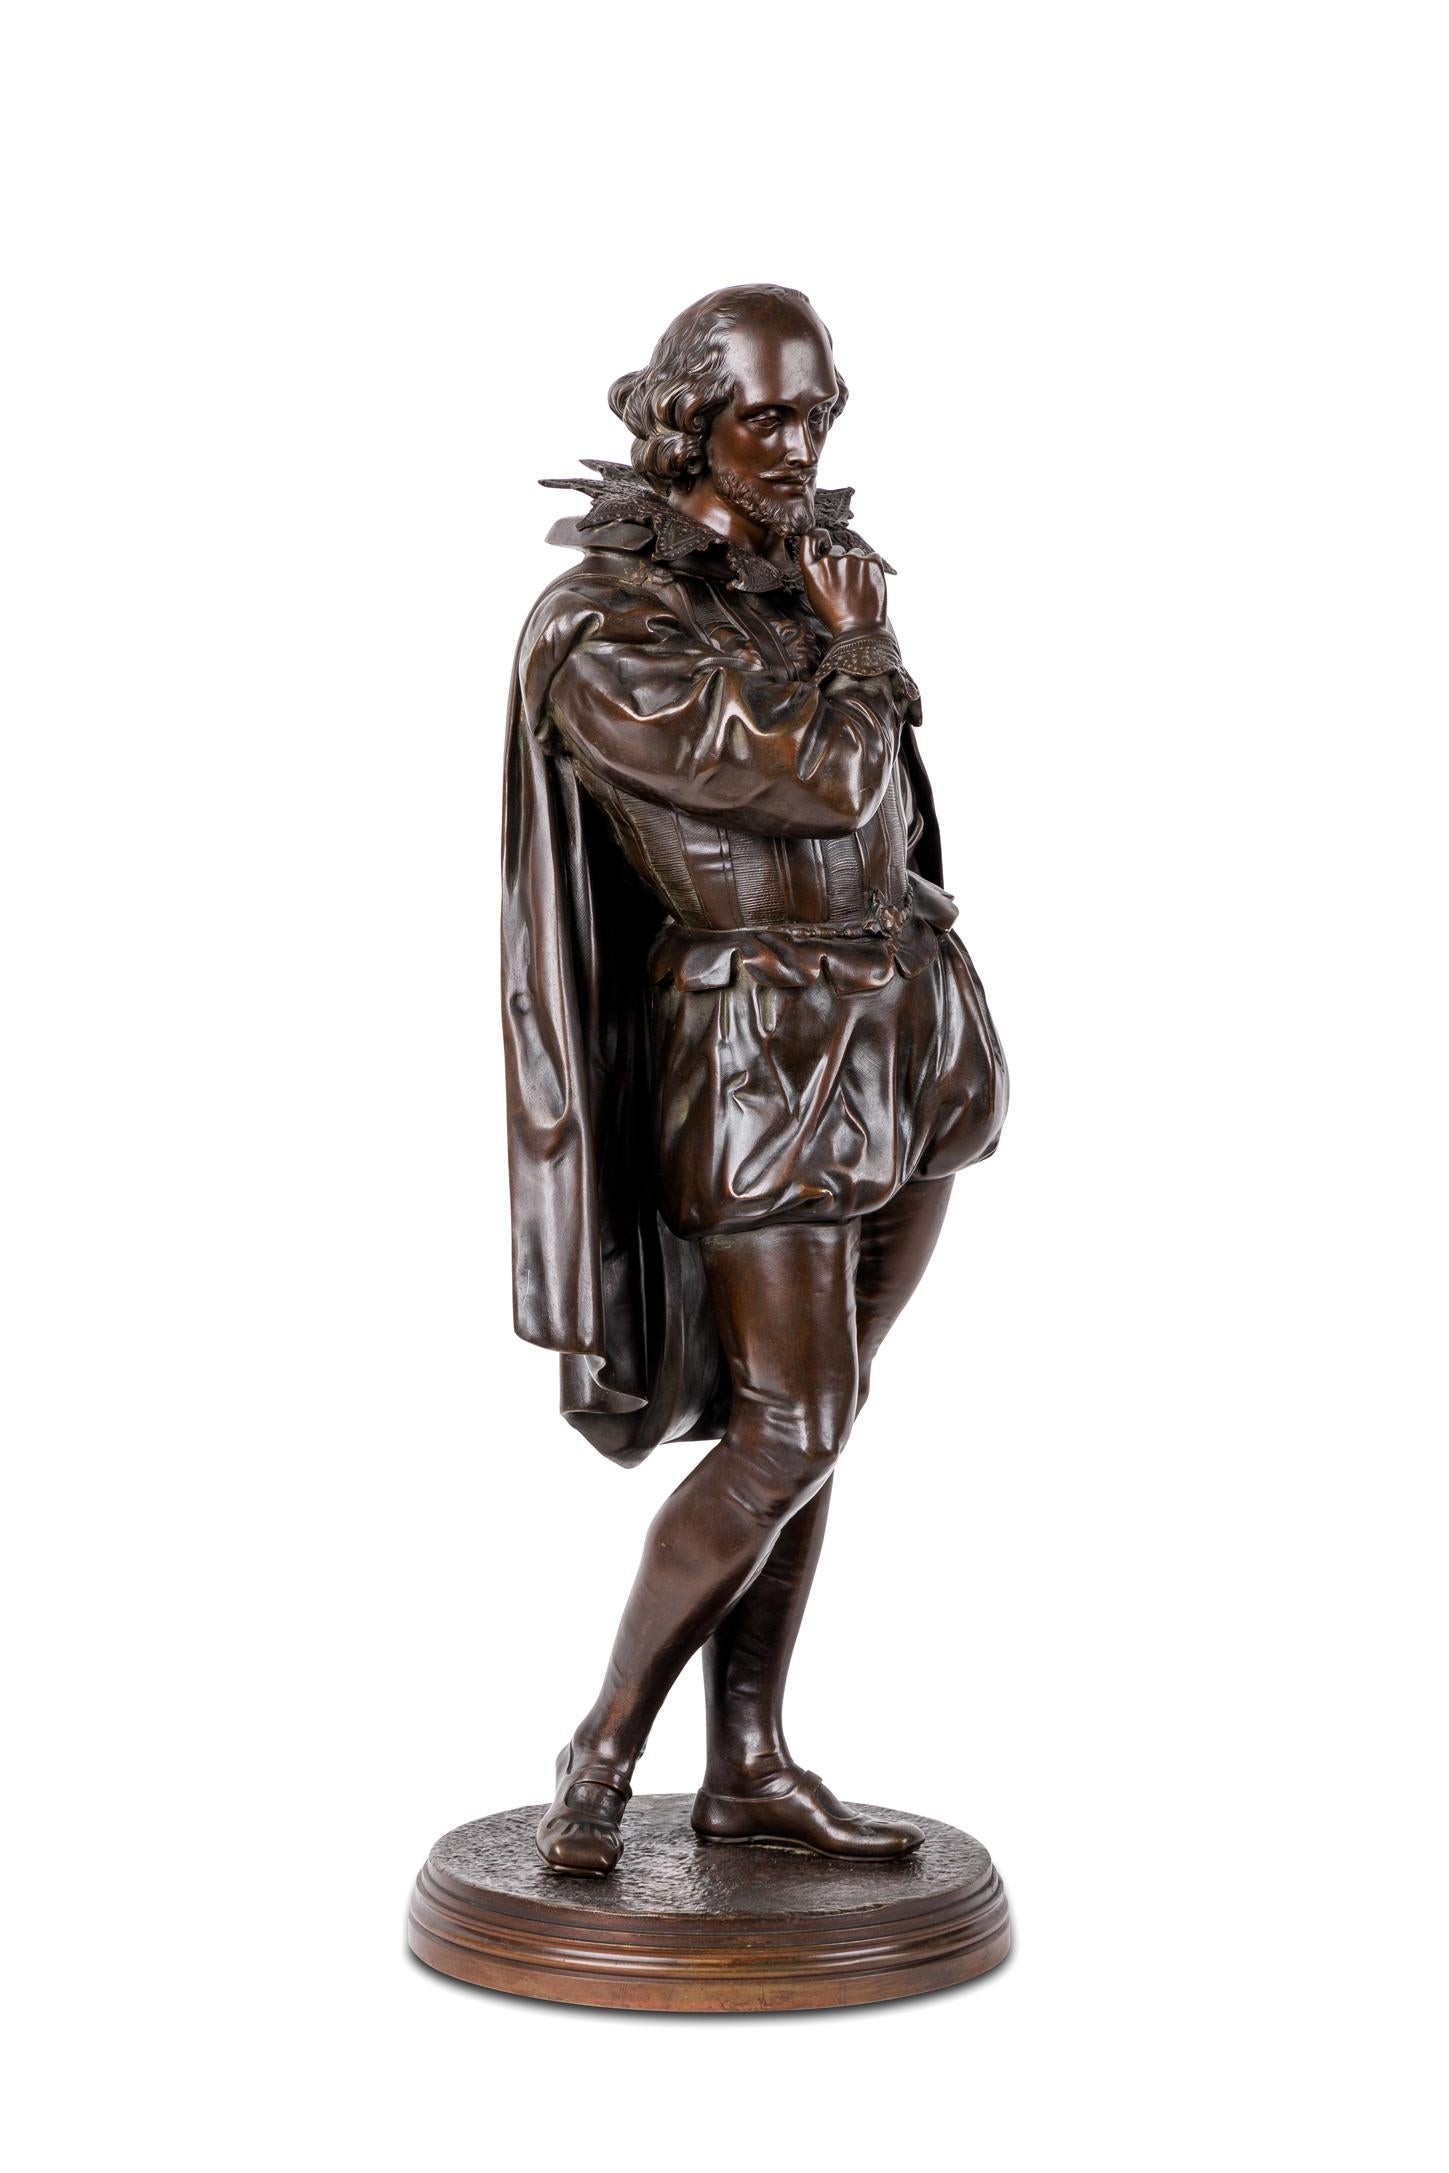 Jean Jules B. Salmson, A Patinated Bronze Sculpture of William Shakespeare - Gold Figurative Sculpture by Jean Jules Salmson